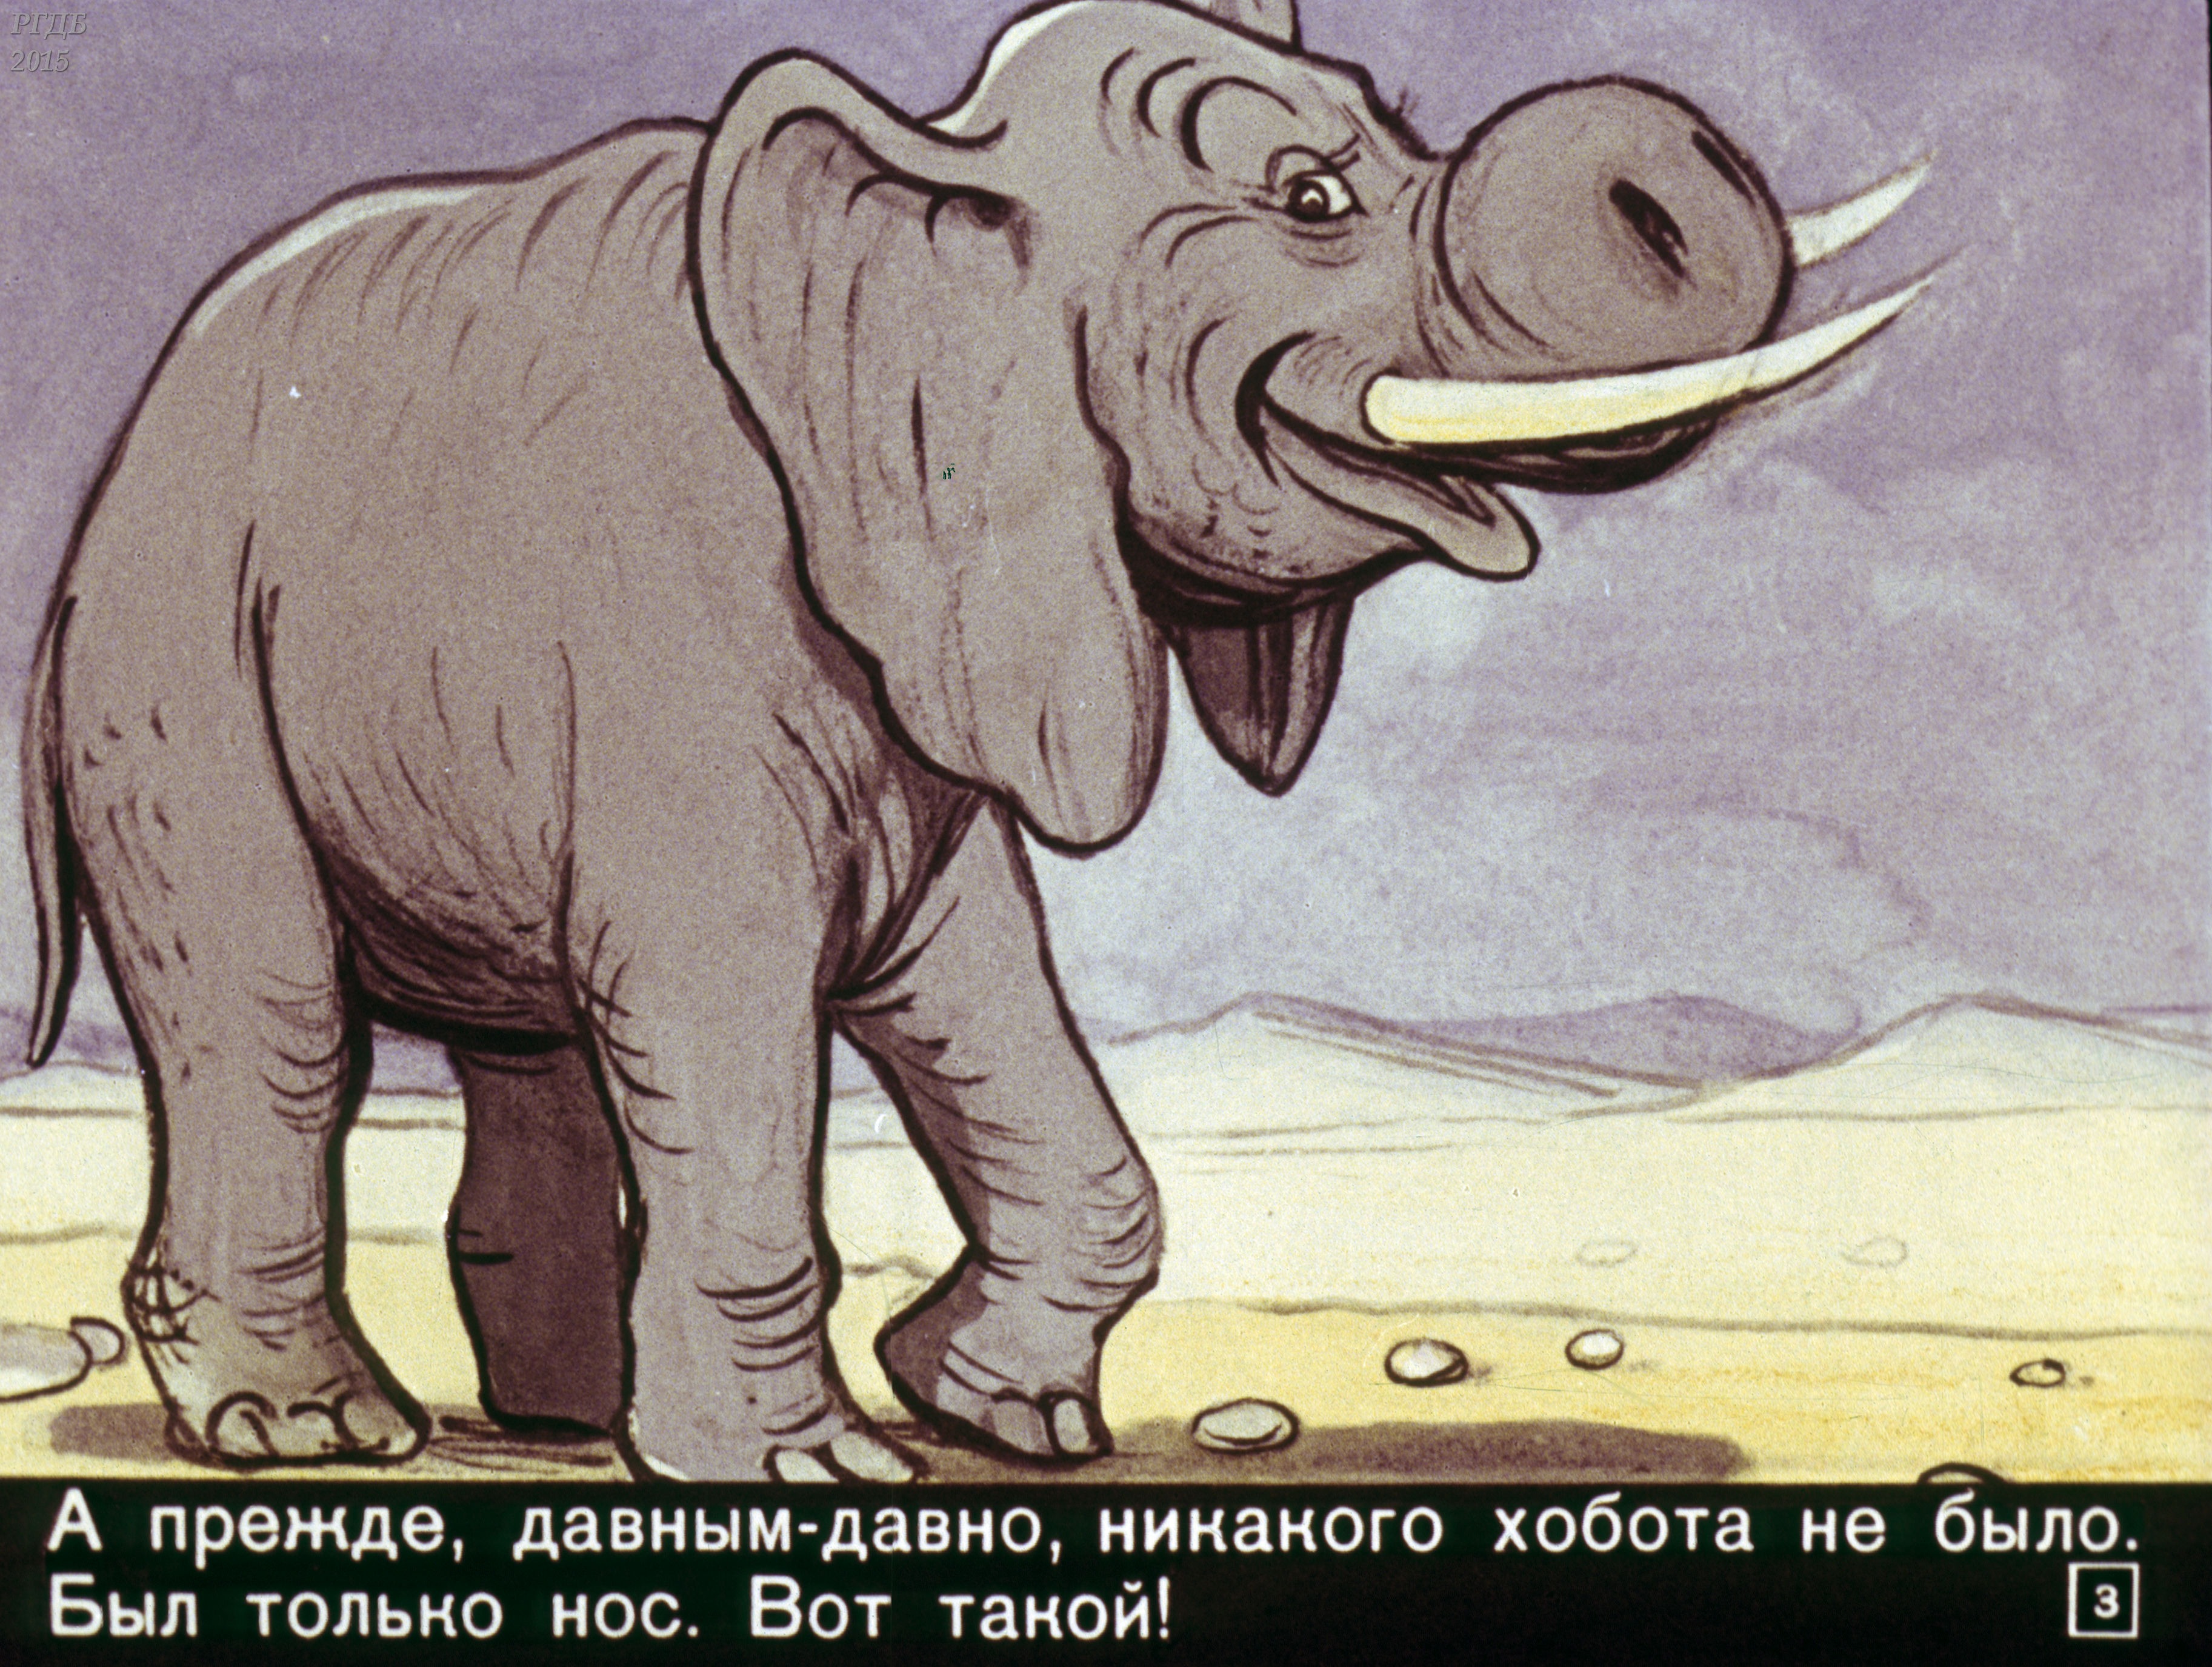 Р киплинг слоненок. Киплинг Редьярд "слонёнок". Любопытный Слоненок Киплинг. Редьярд Киплинг сказка Слоненок. Киплинг р. "про Слонёнка".